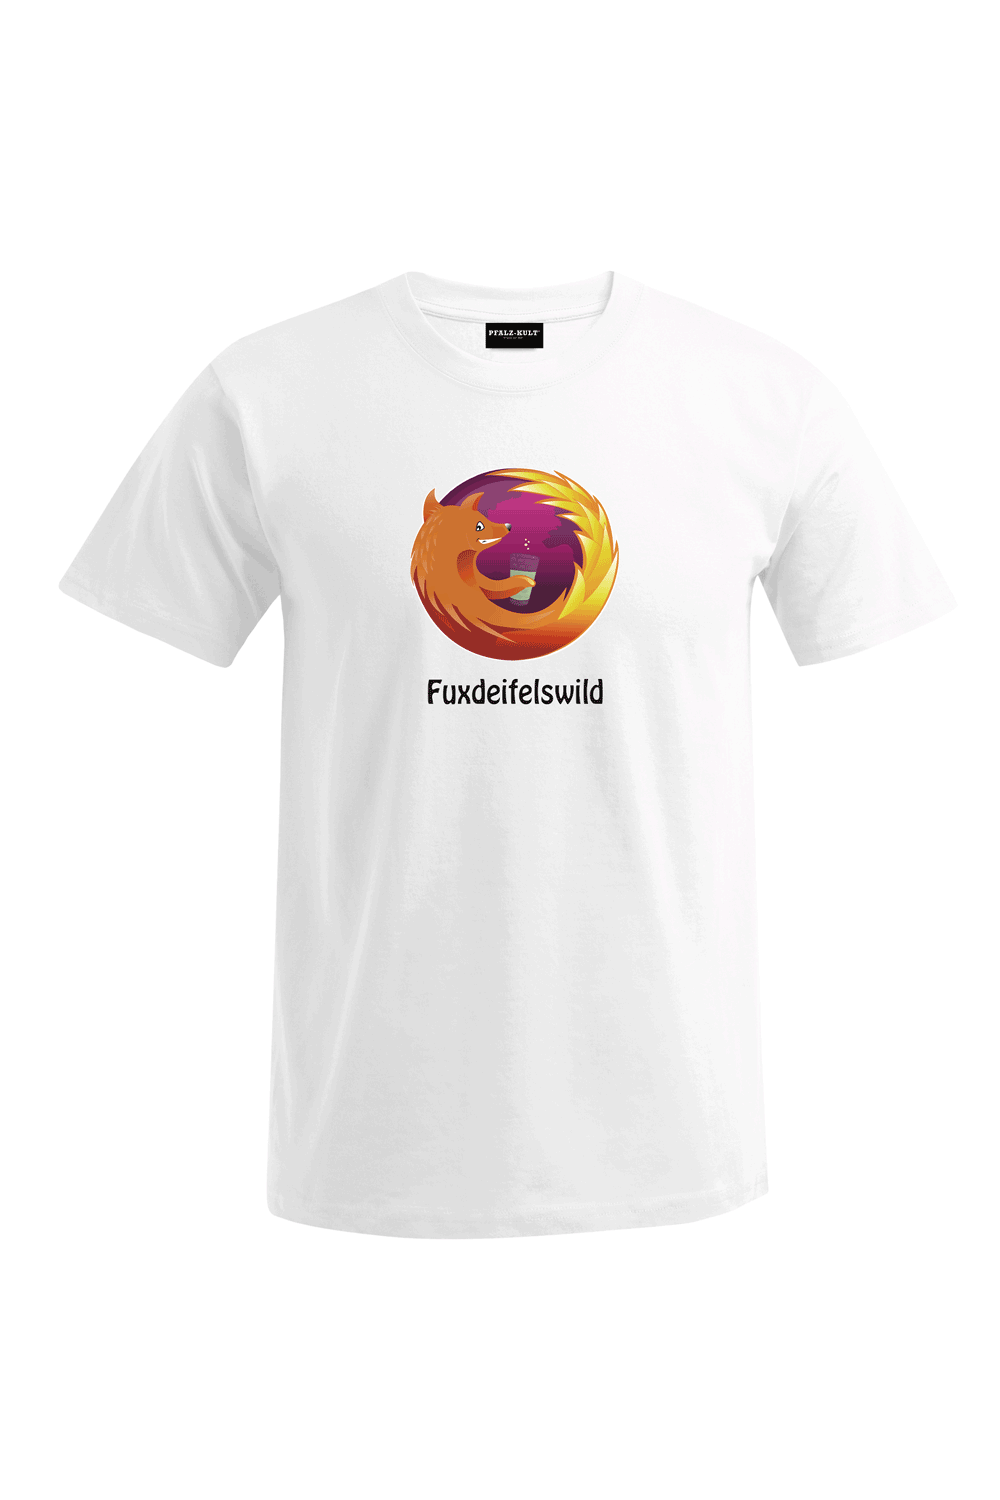 Fuxdeiwlswild - Männer T-Shirt -Unisex